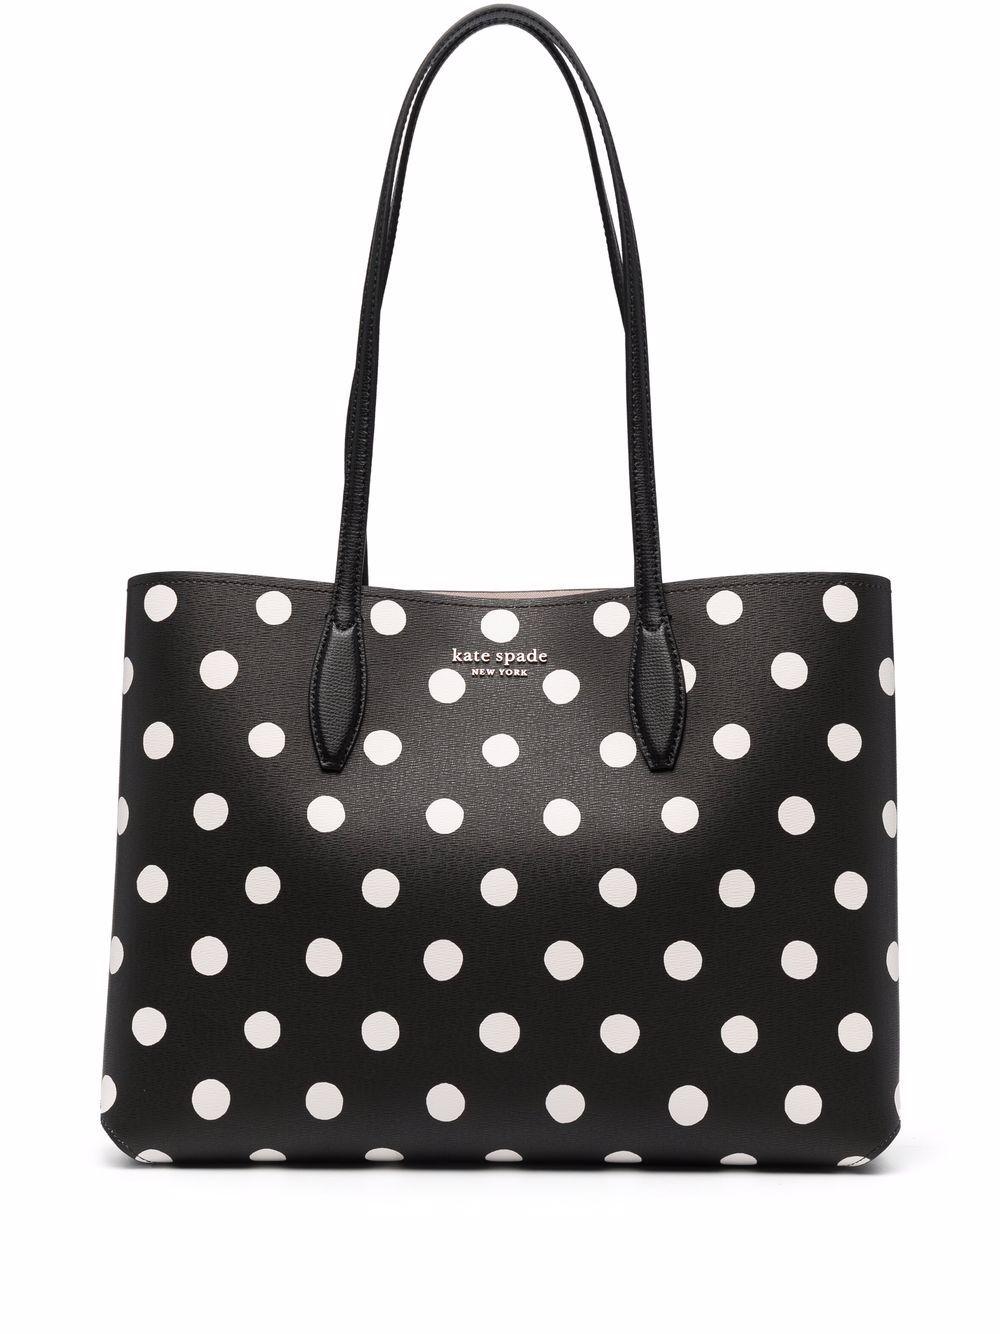 Kate Spade polka dot handbag | Kate spade polka dots, Handbag shopping,  Handbag